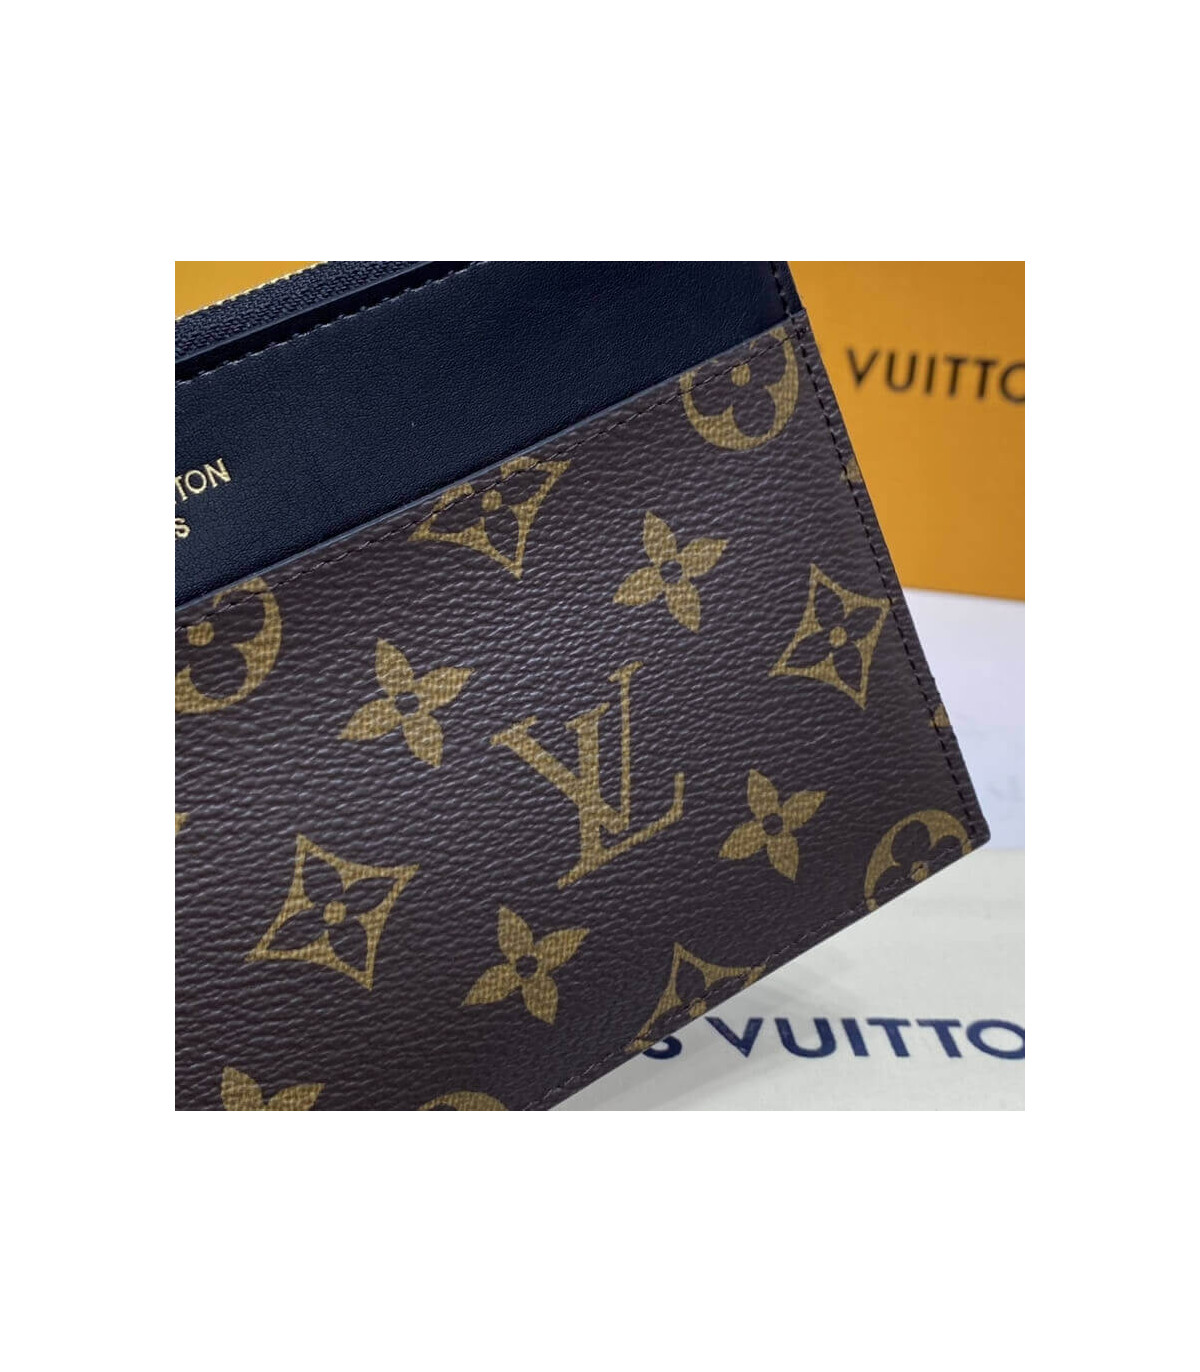 Shop Louis Vuitton MONOGRAM Slim purse (M80390) by SkyNS